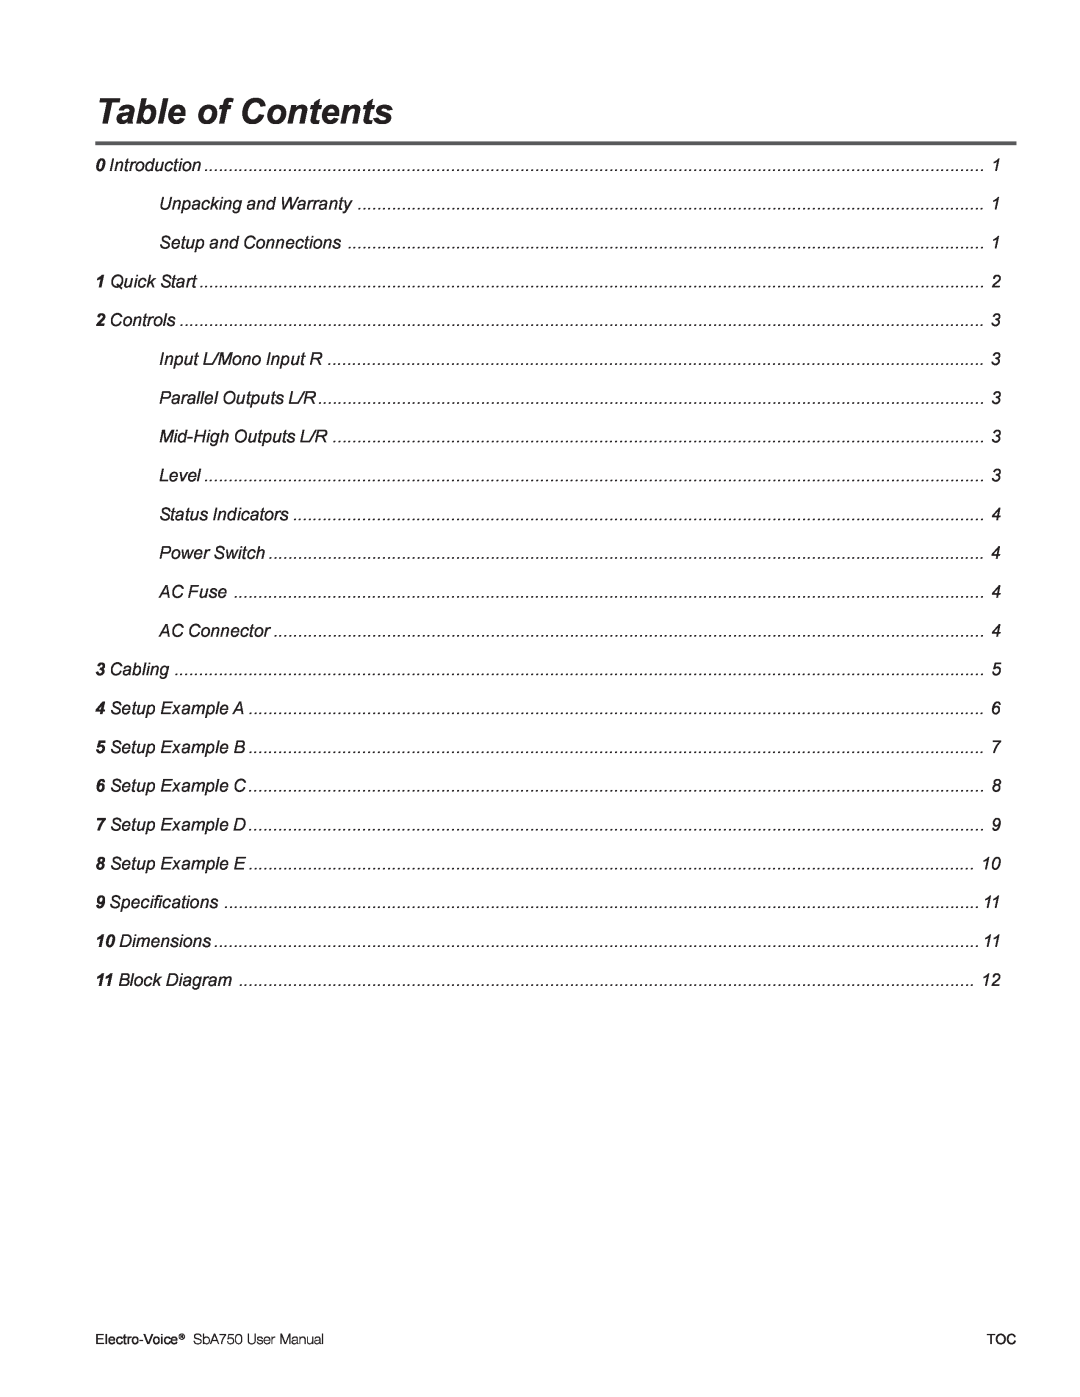 Electro-Voice SBA750 user manual Table of Contents, Electro-Voice 